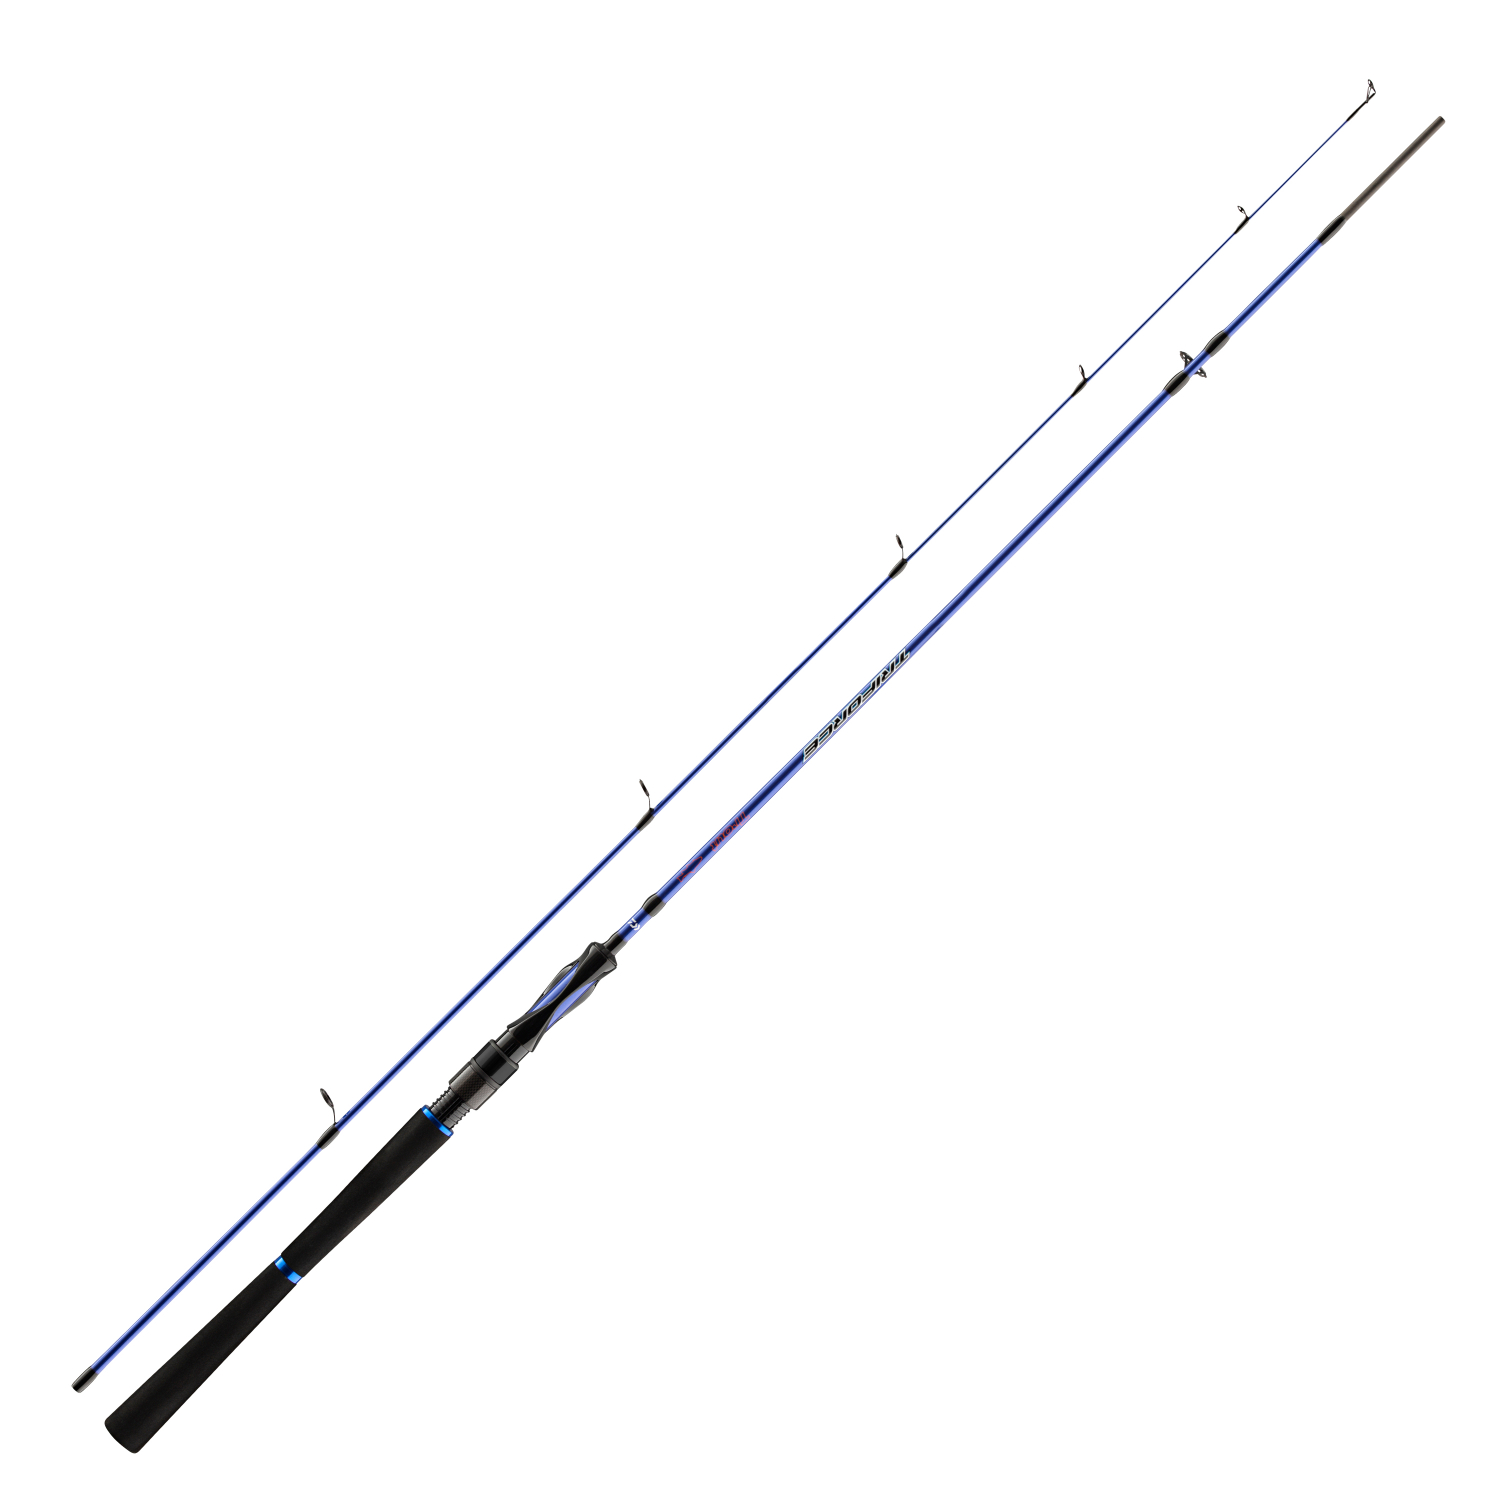 https://images.askari-sport.com/en/product/1/large/daiwa-spinning-rod-triforce-target-spin-trout-spin.jpg